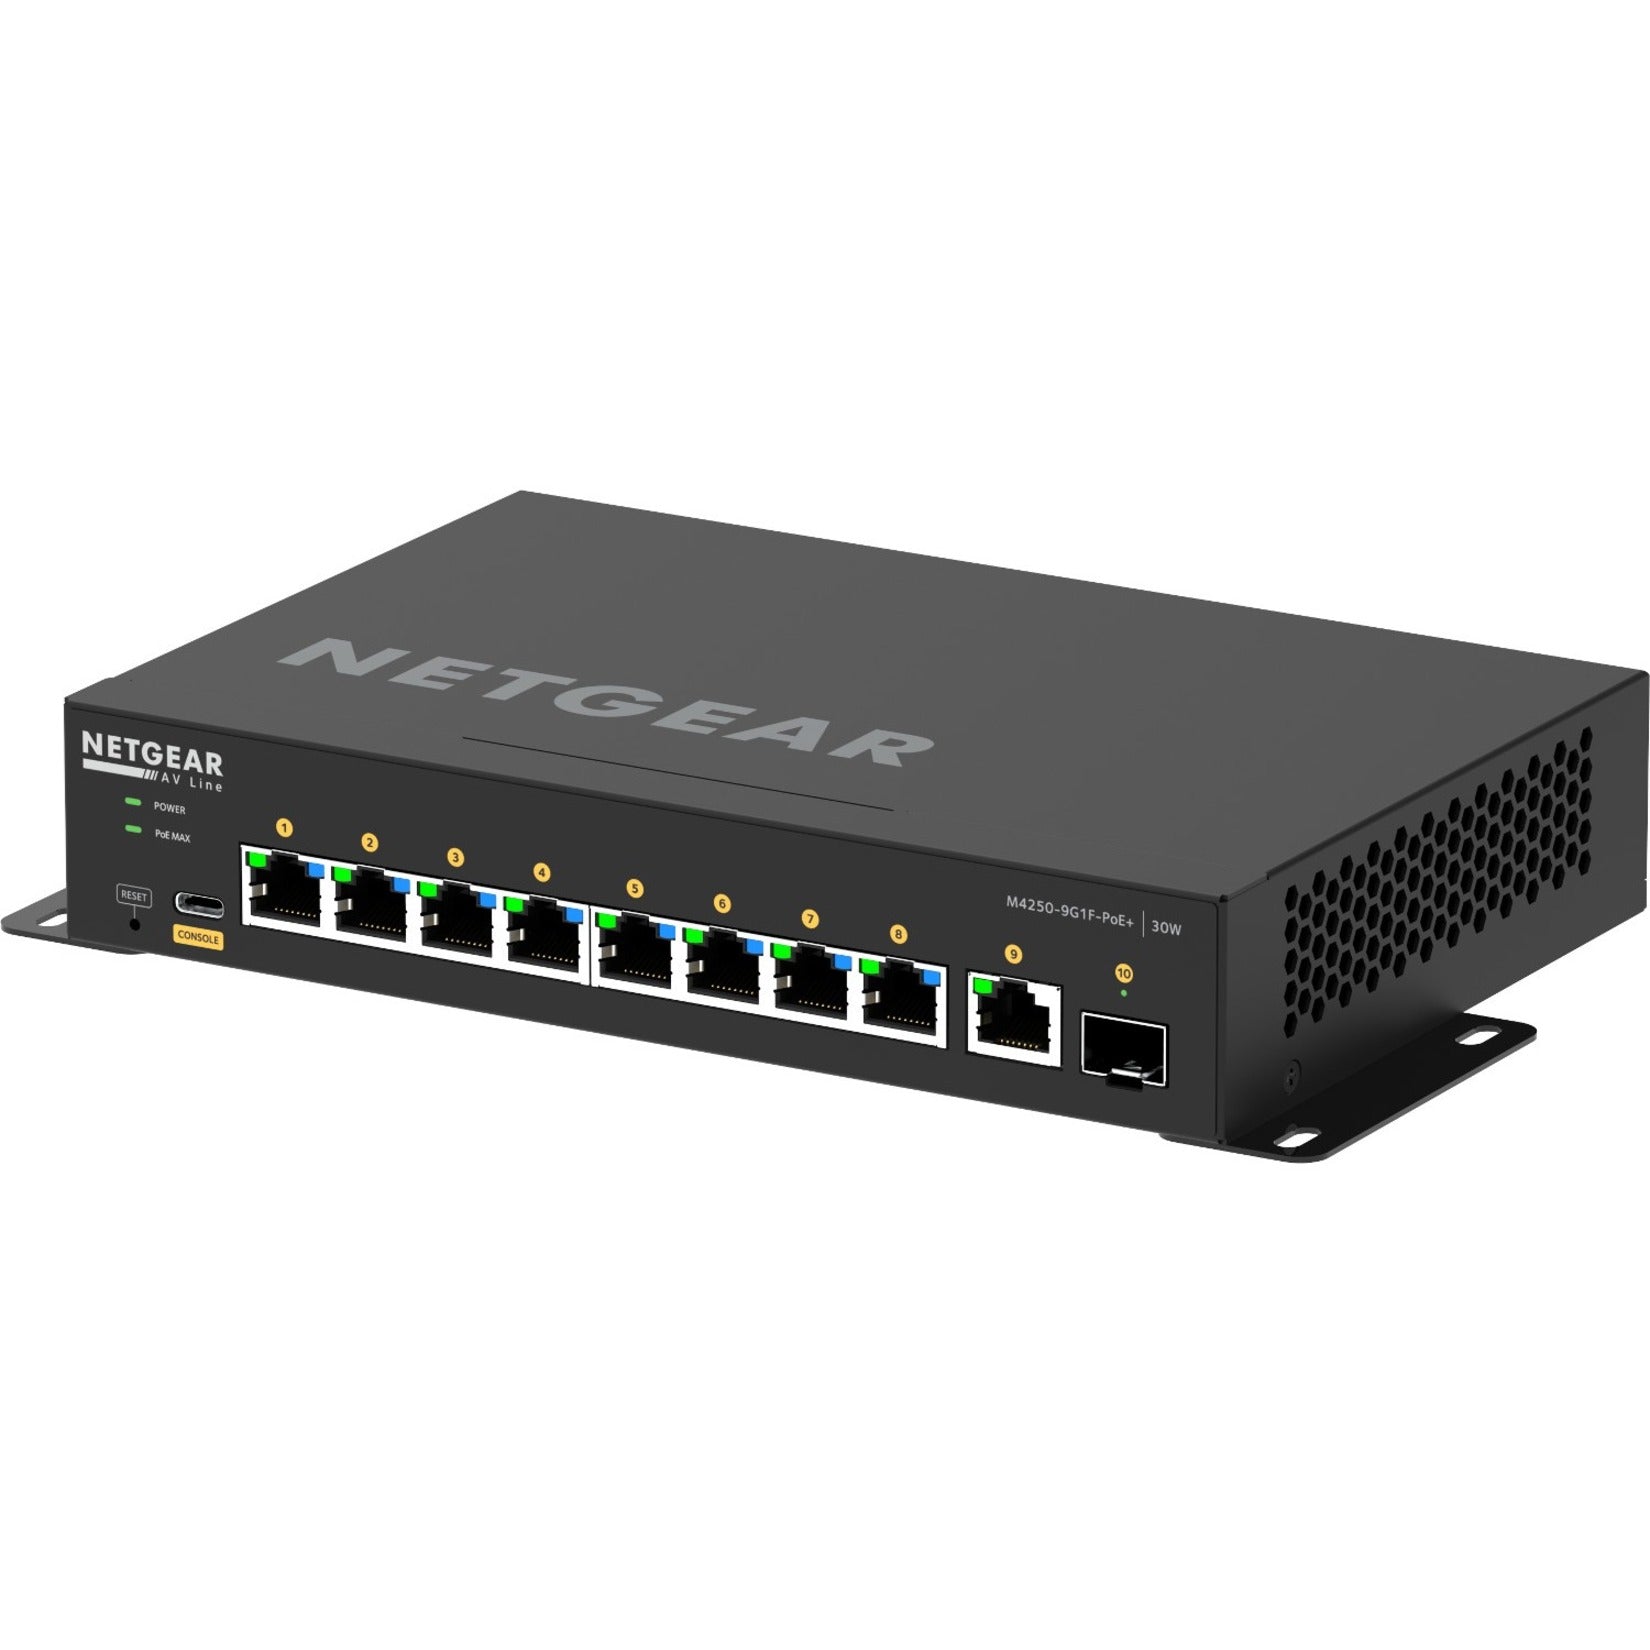 Netgear GSM4210PD-100NAS AV Line M4250 Ethernet Switch, 8-Port Gigabit PoE+ with 110W Budget